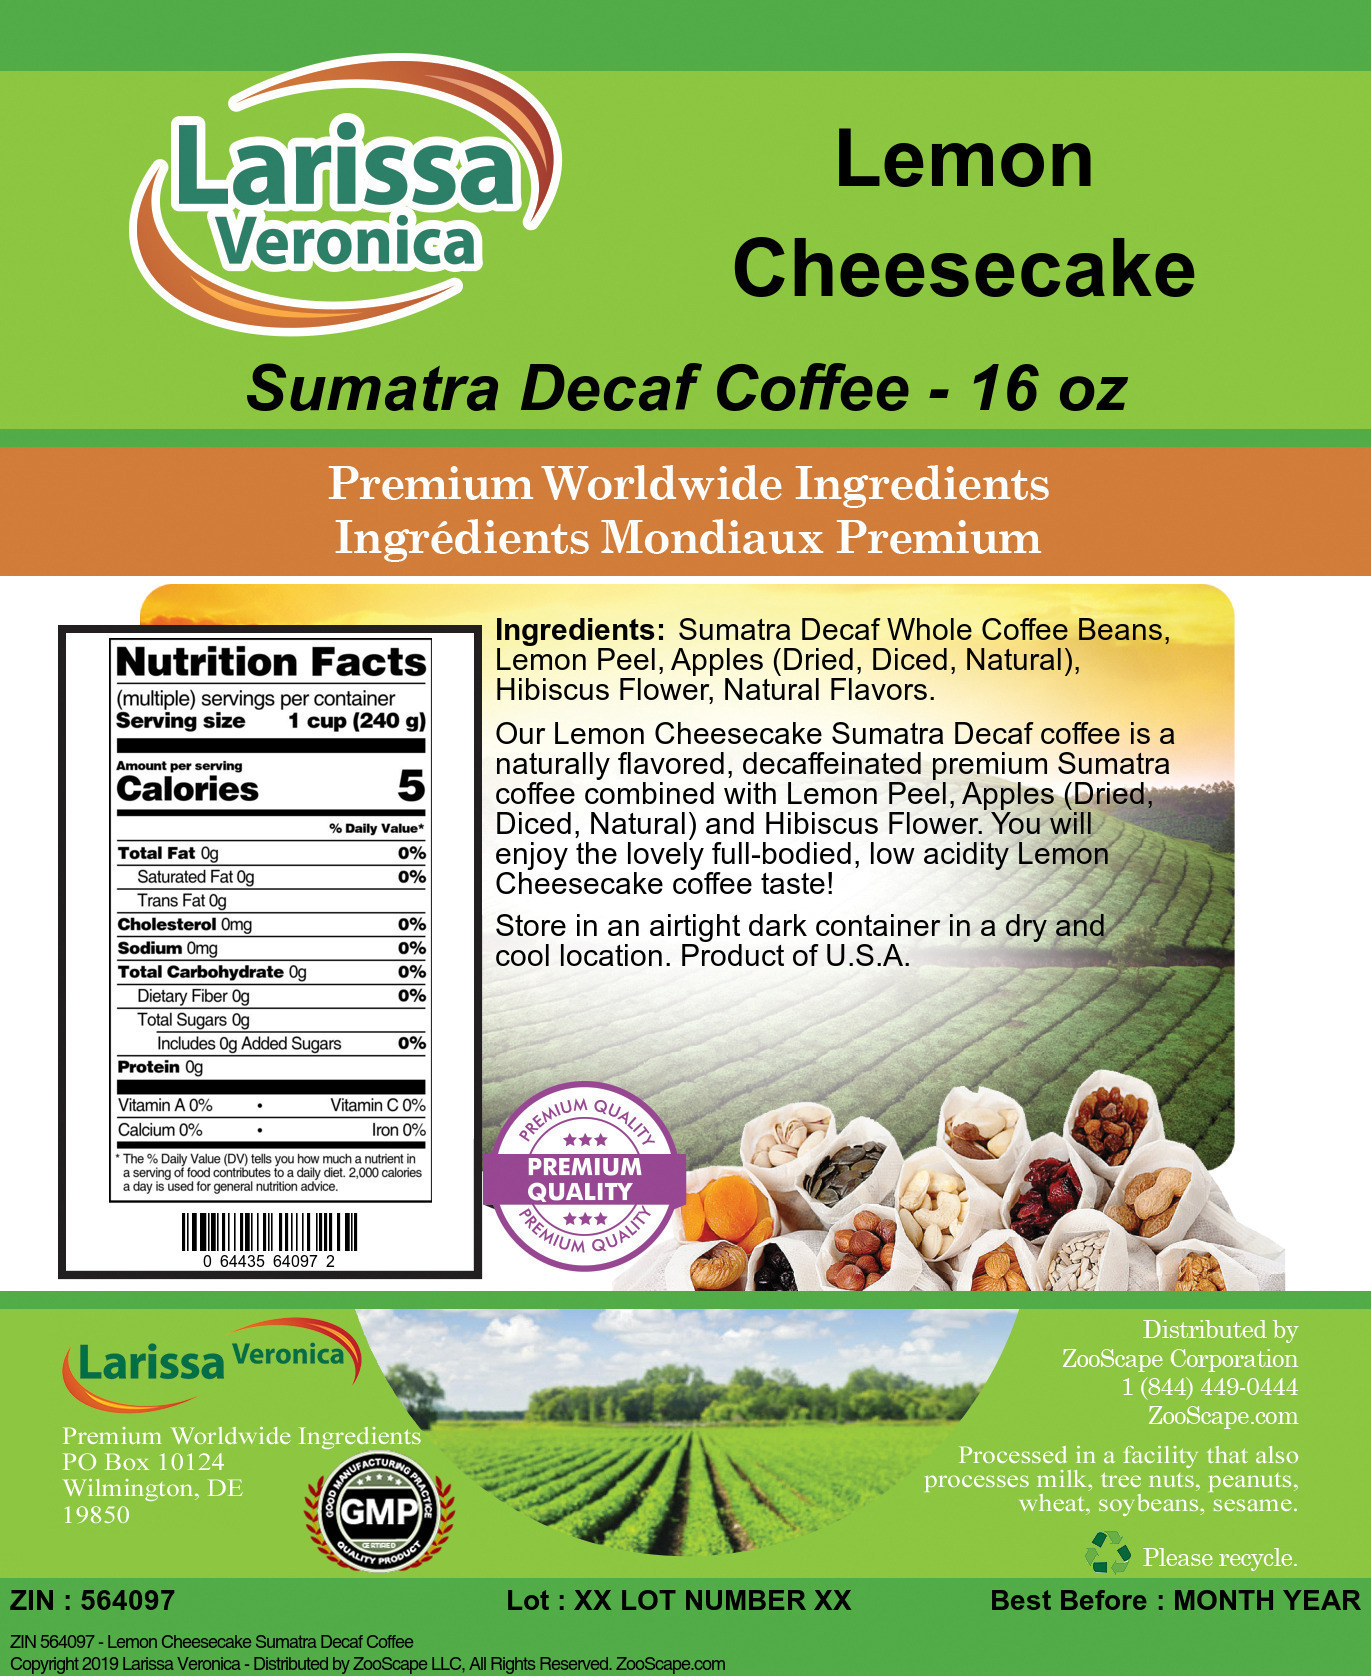 Lemon Cheesecake Sumatra Decaf Coffee - Label